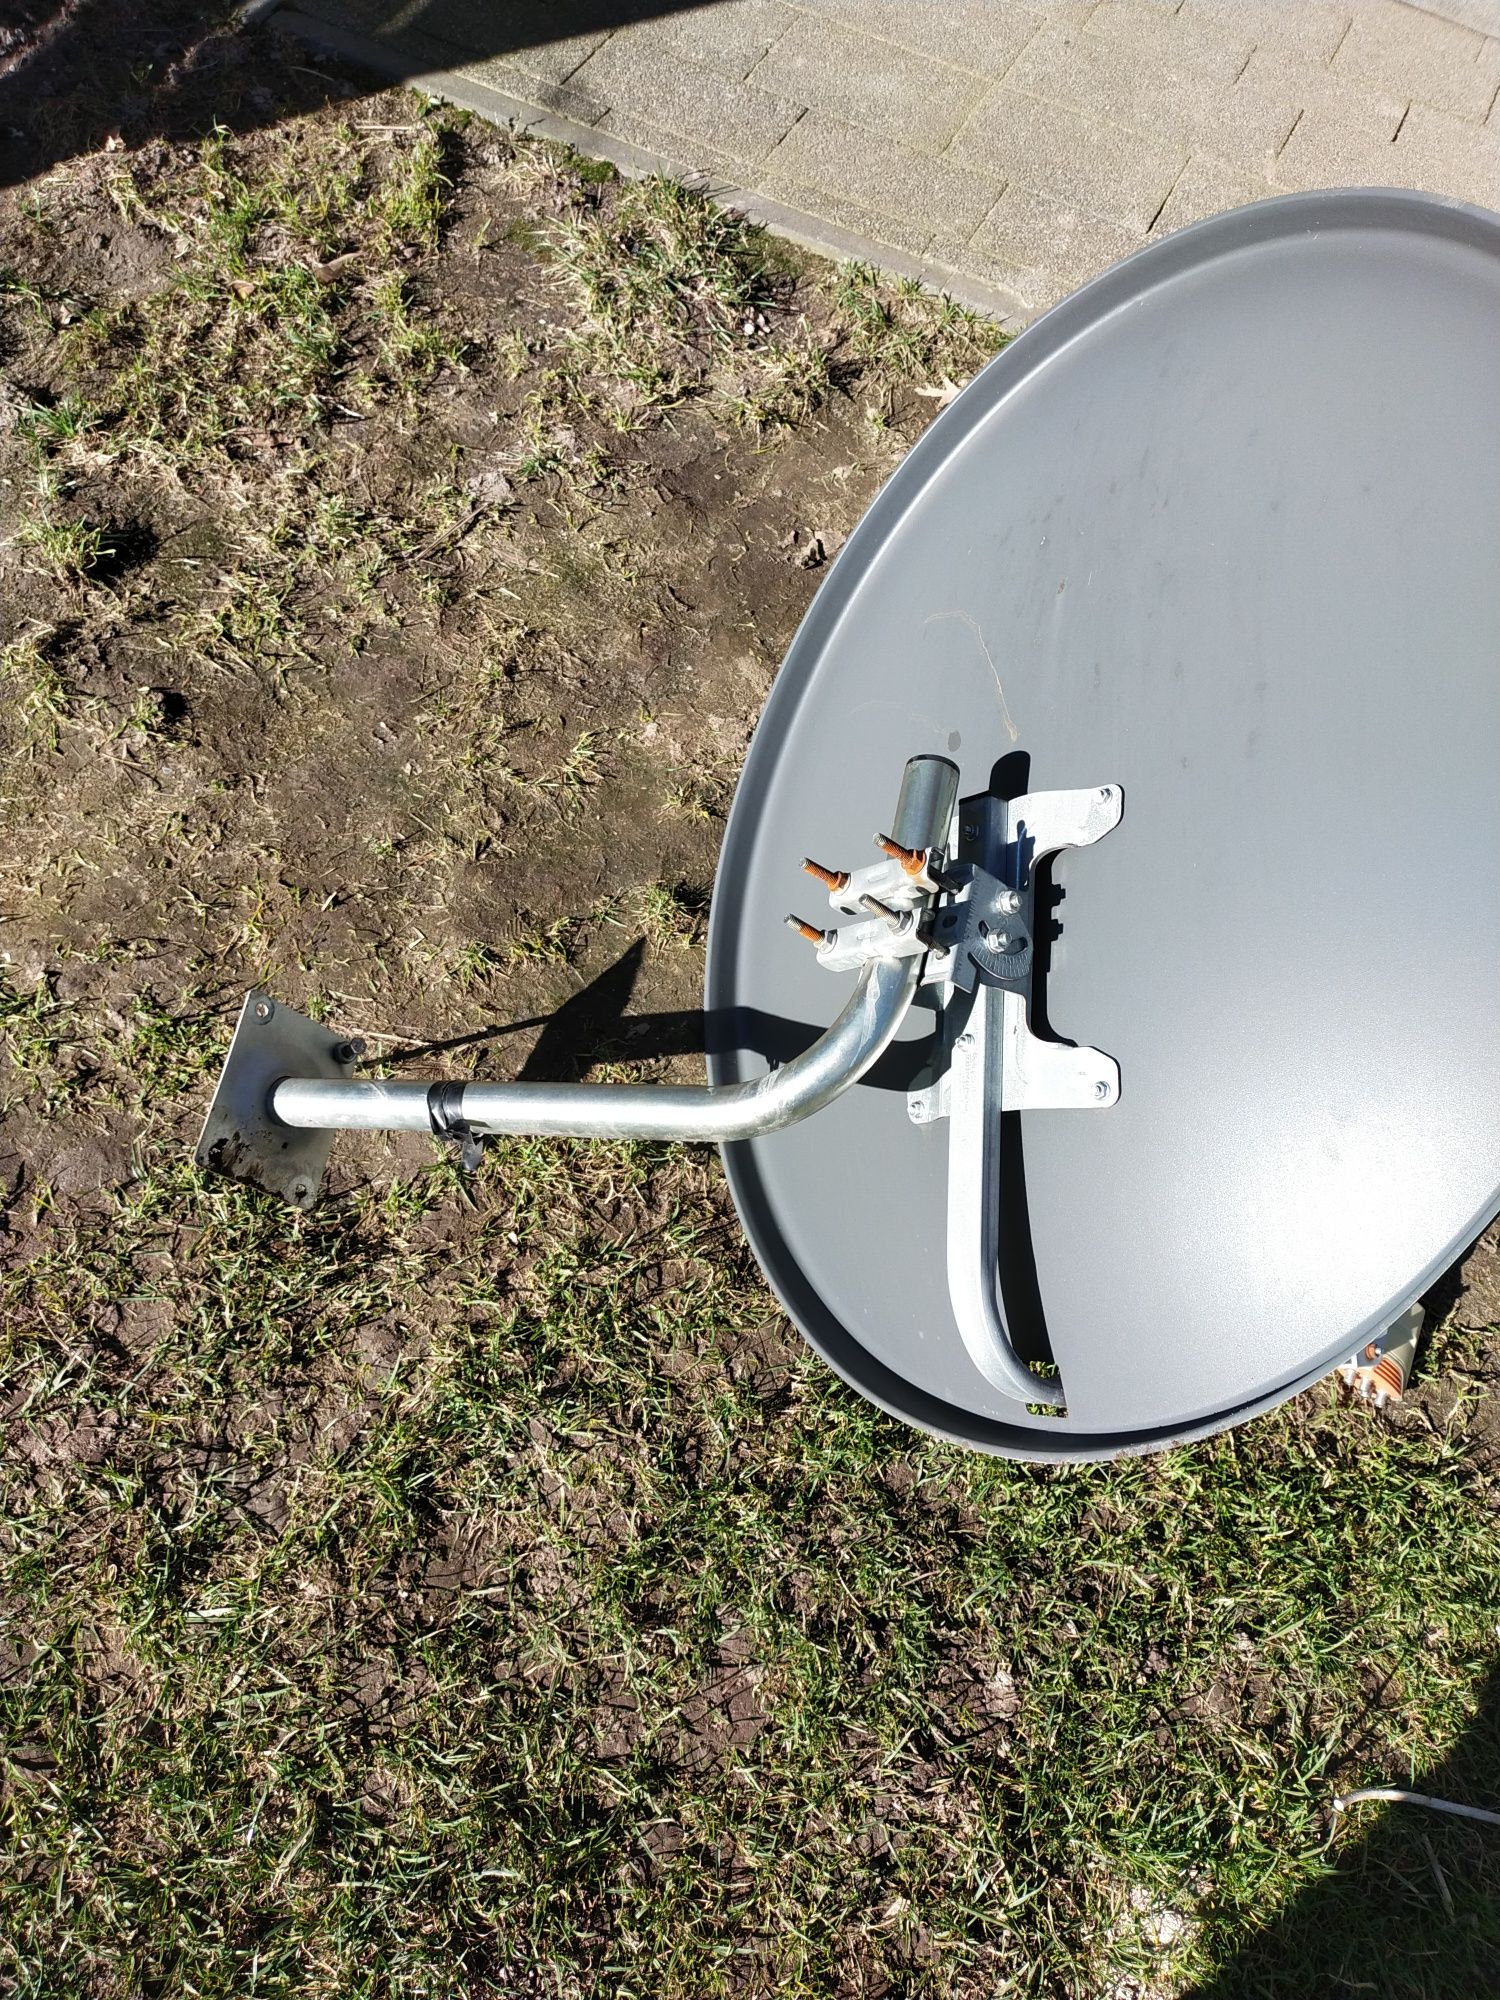 Antena satelitarna